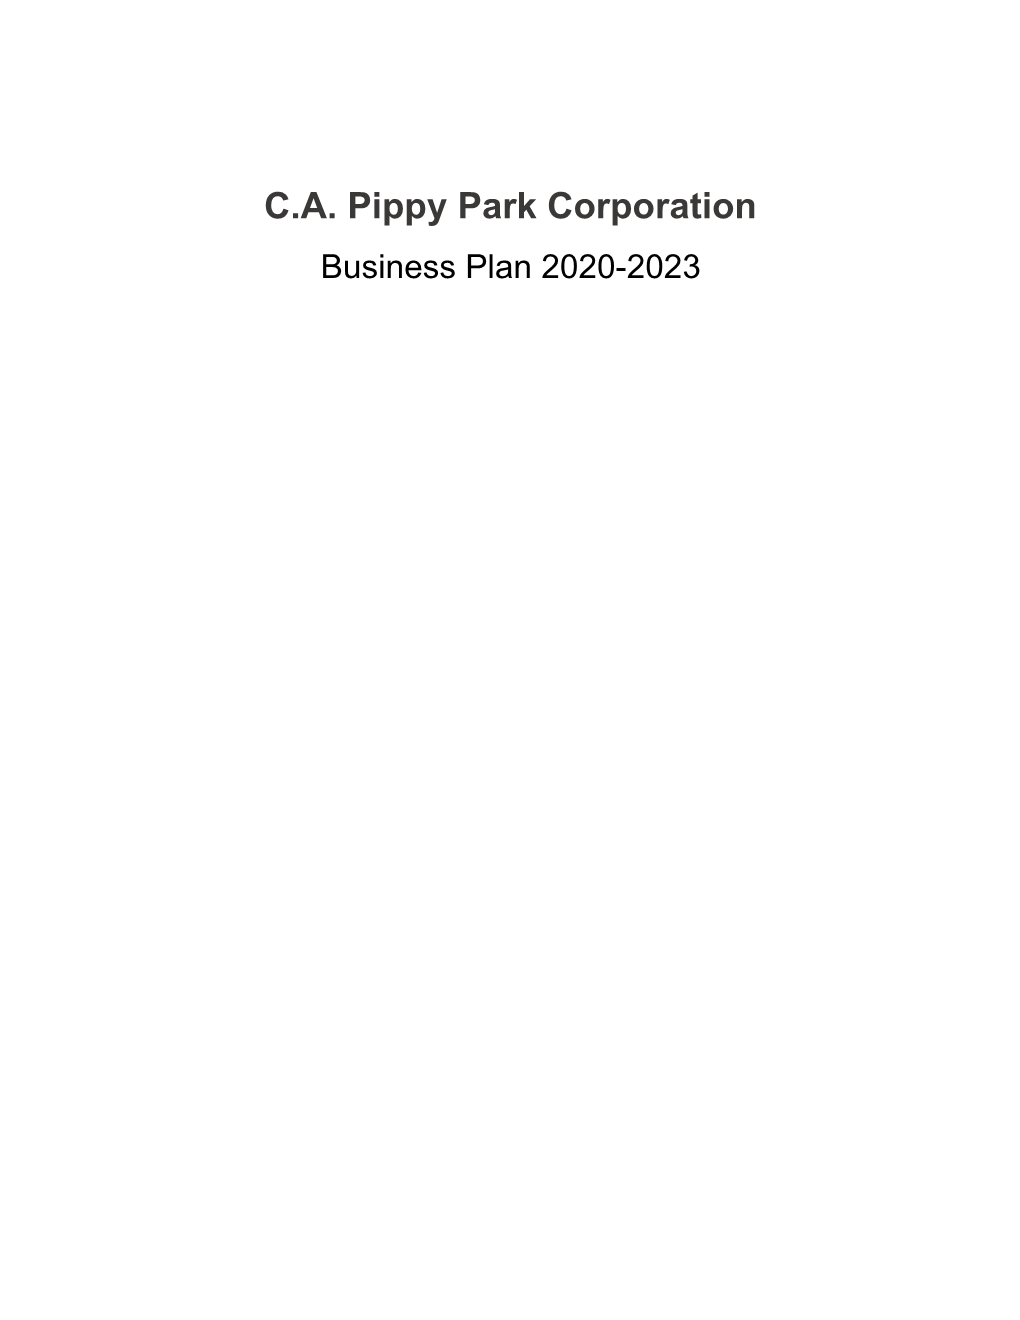 CA Pippy Park Corporation